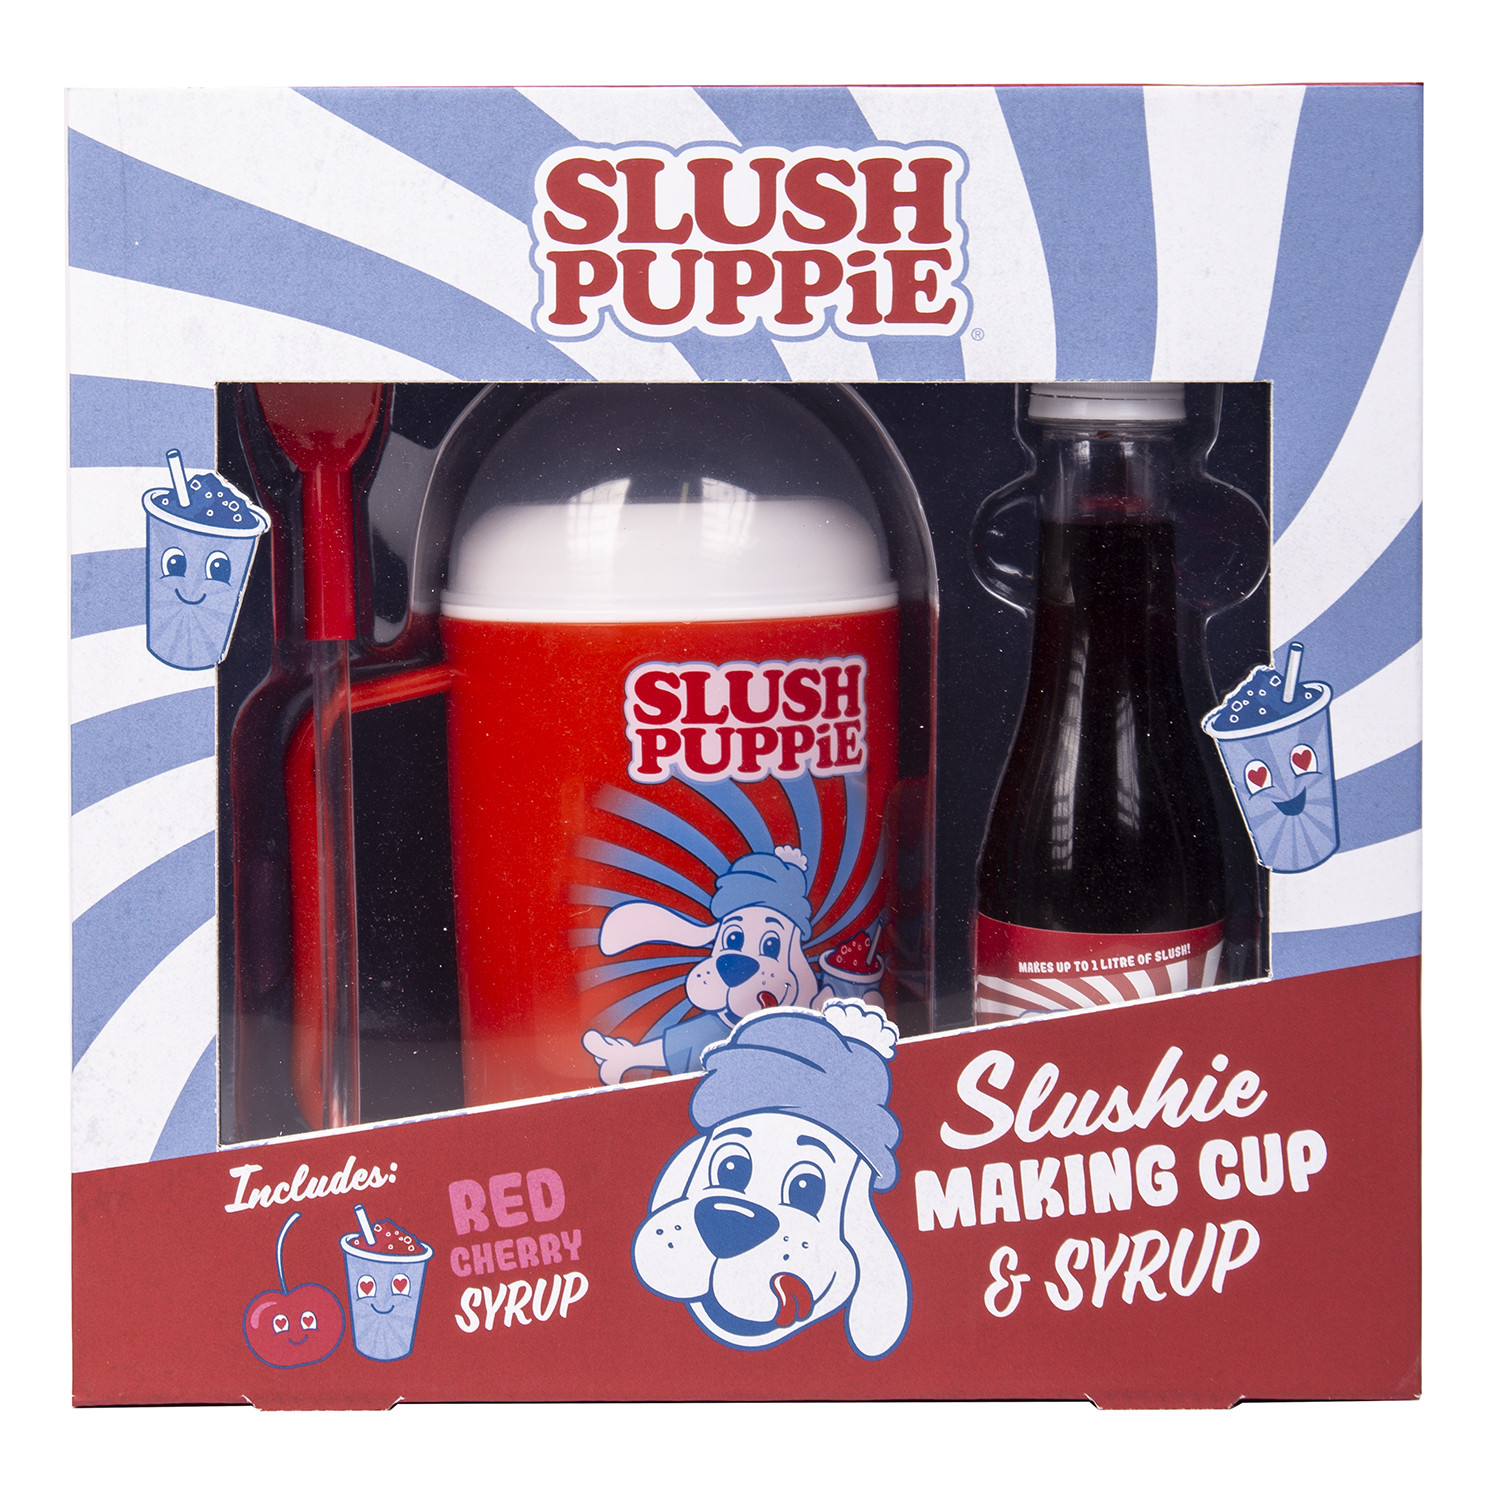 G&G Slush Puppie Red Cherry Slushie Making Cup and Syrup Image 1